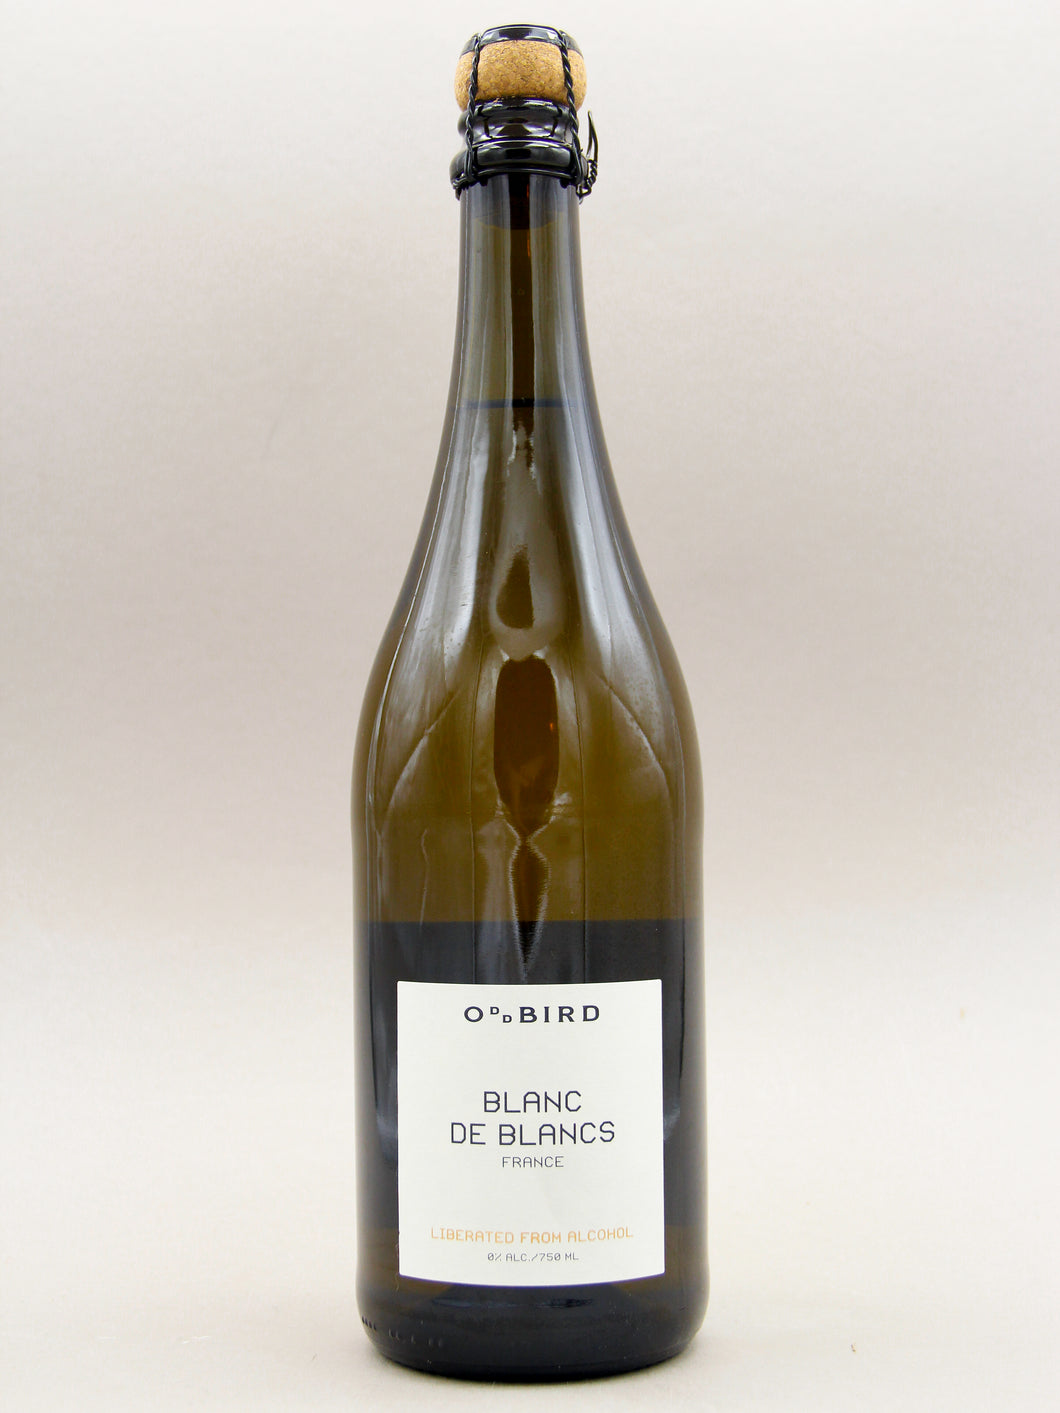 Oddbird, Blancs des Blancs, Non-alc sparkling wine, France (0.5%, 75cl)